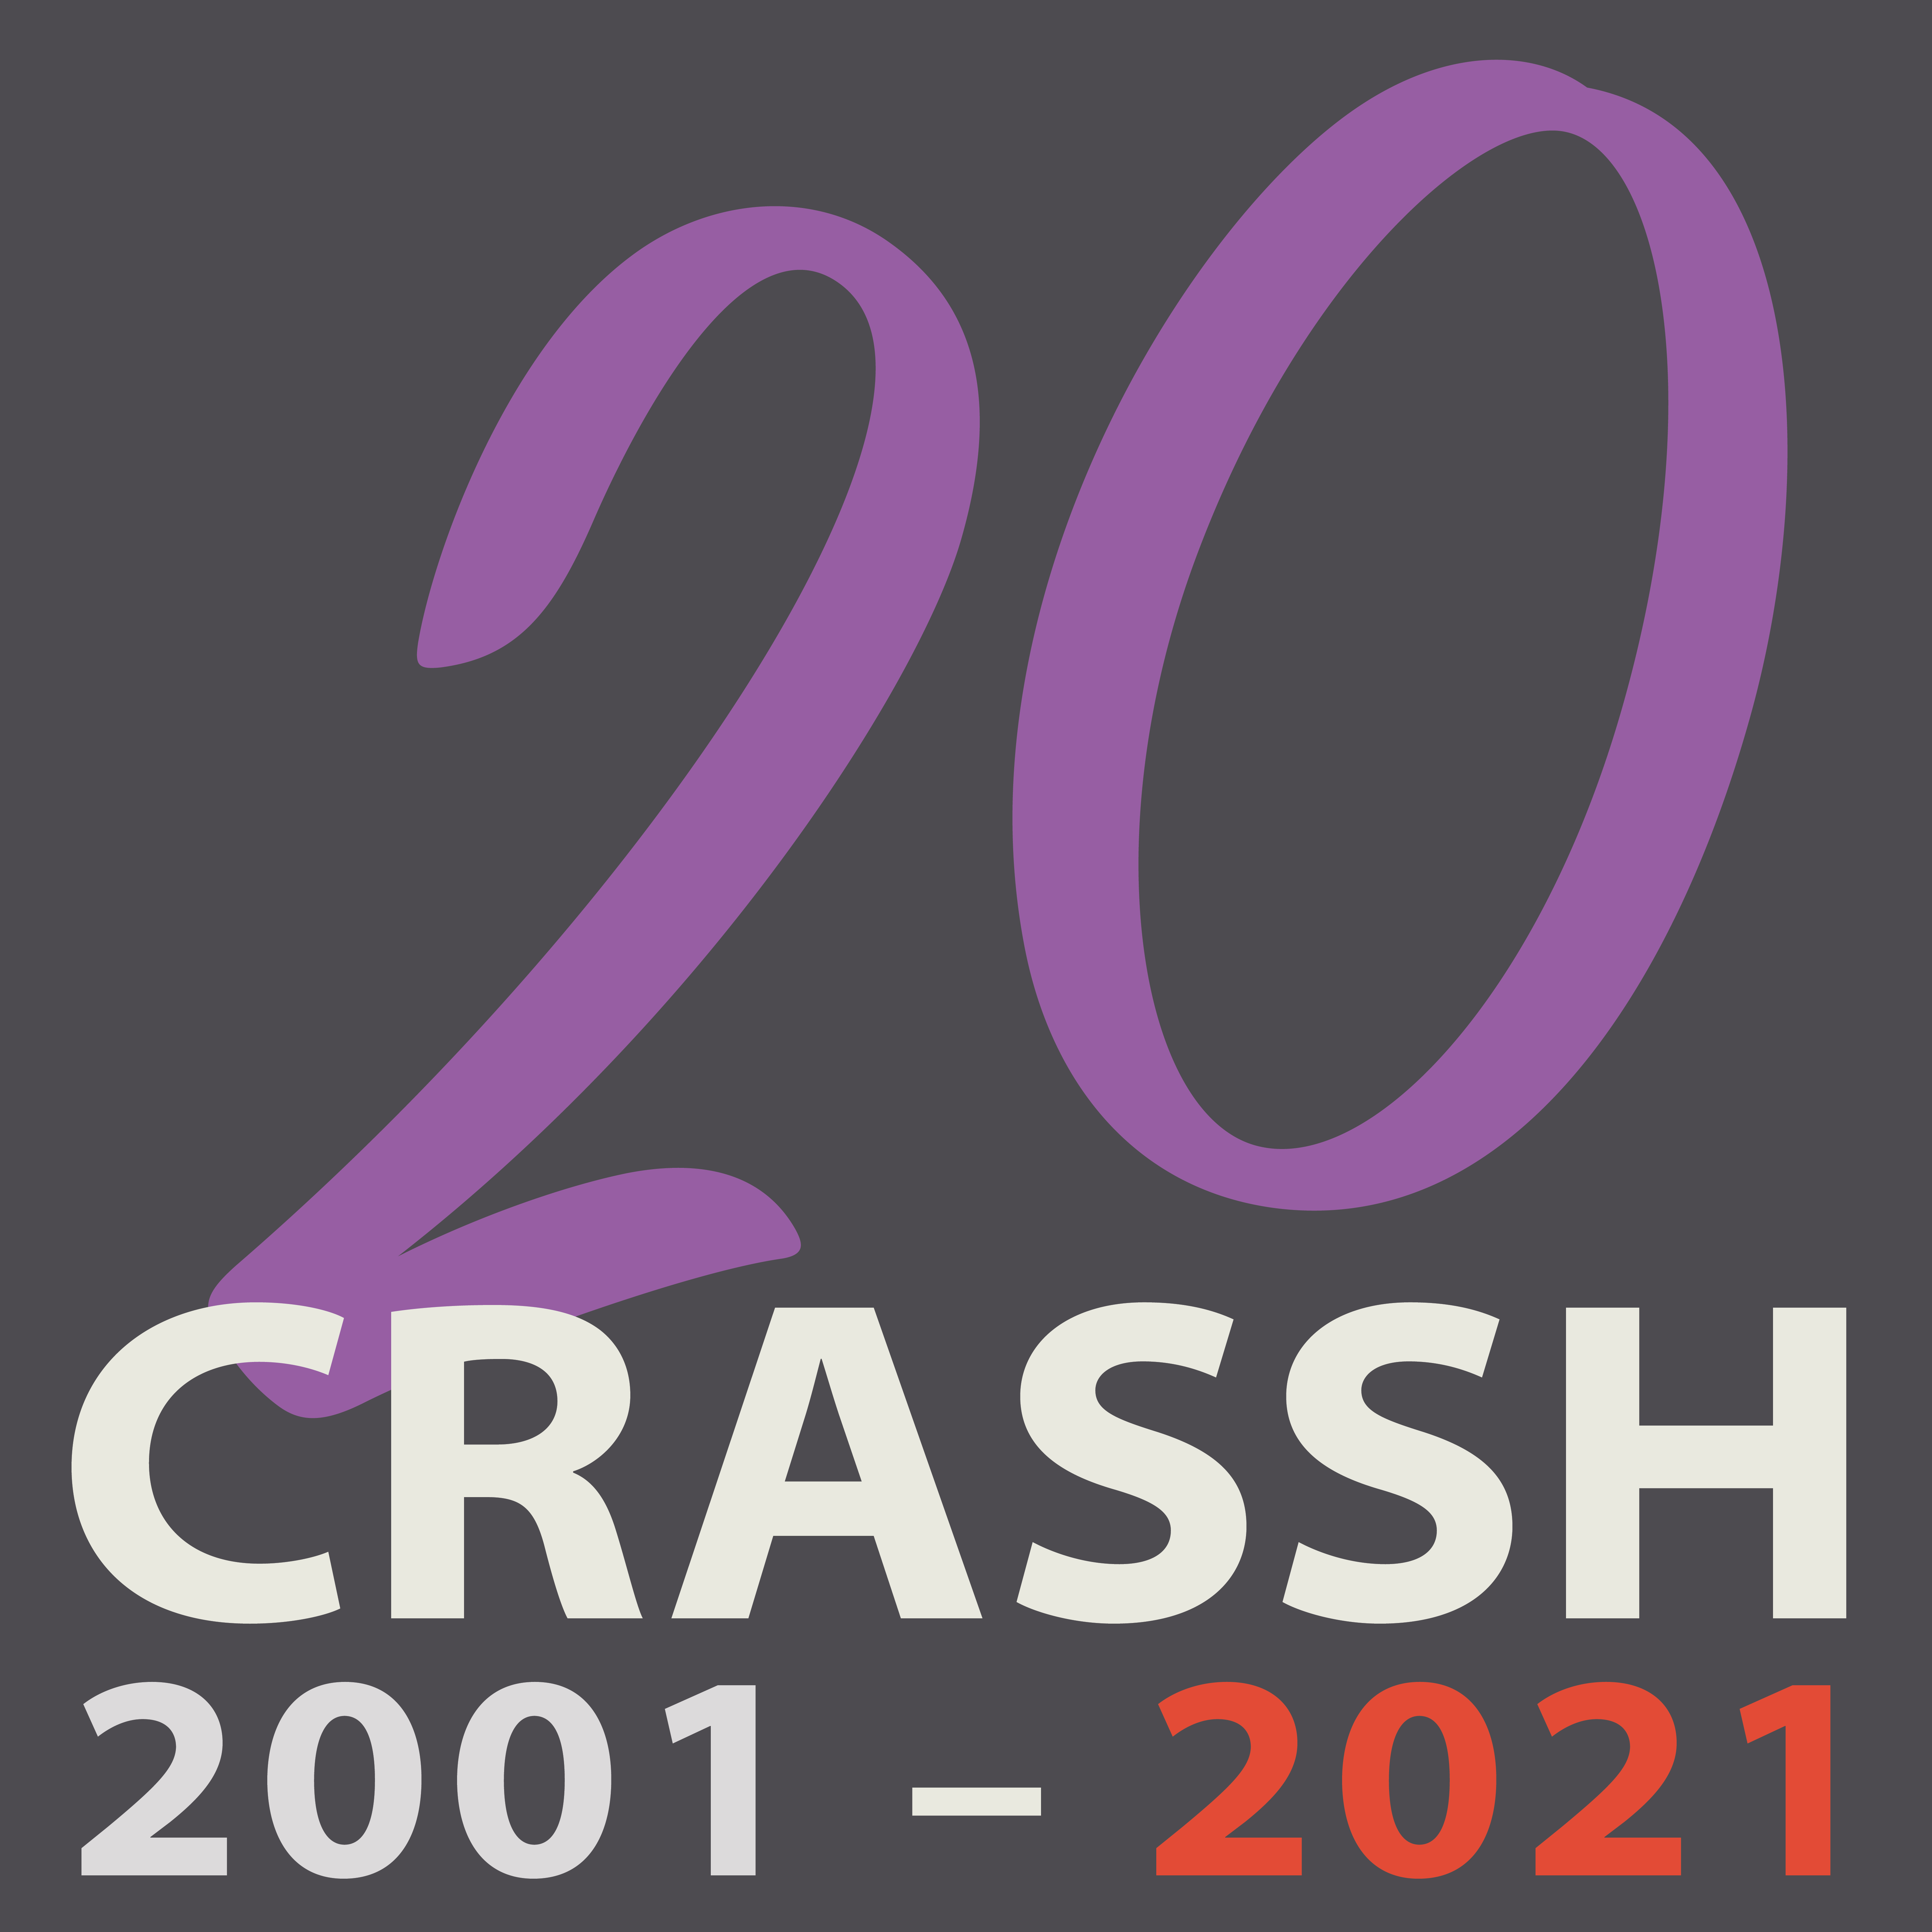 CRASSH anniversary logo